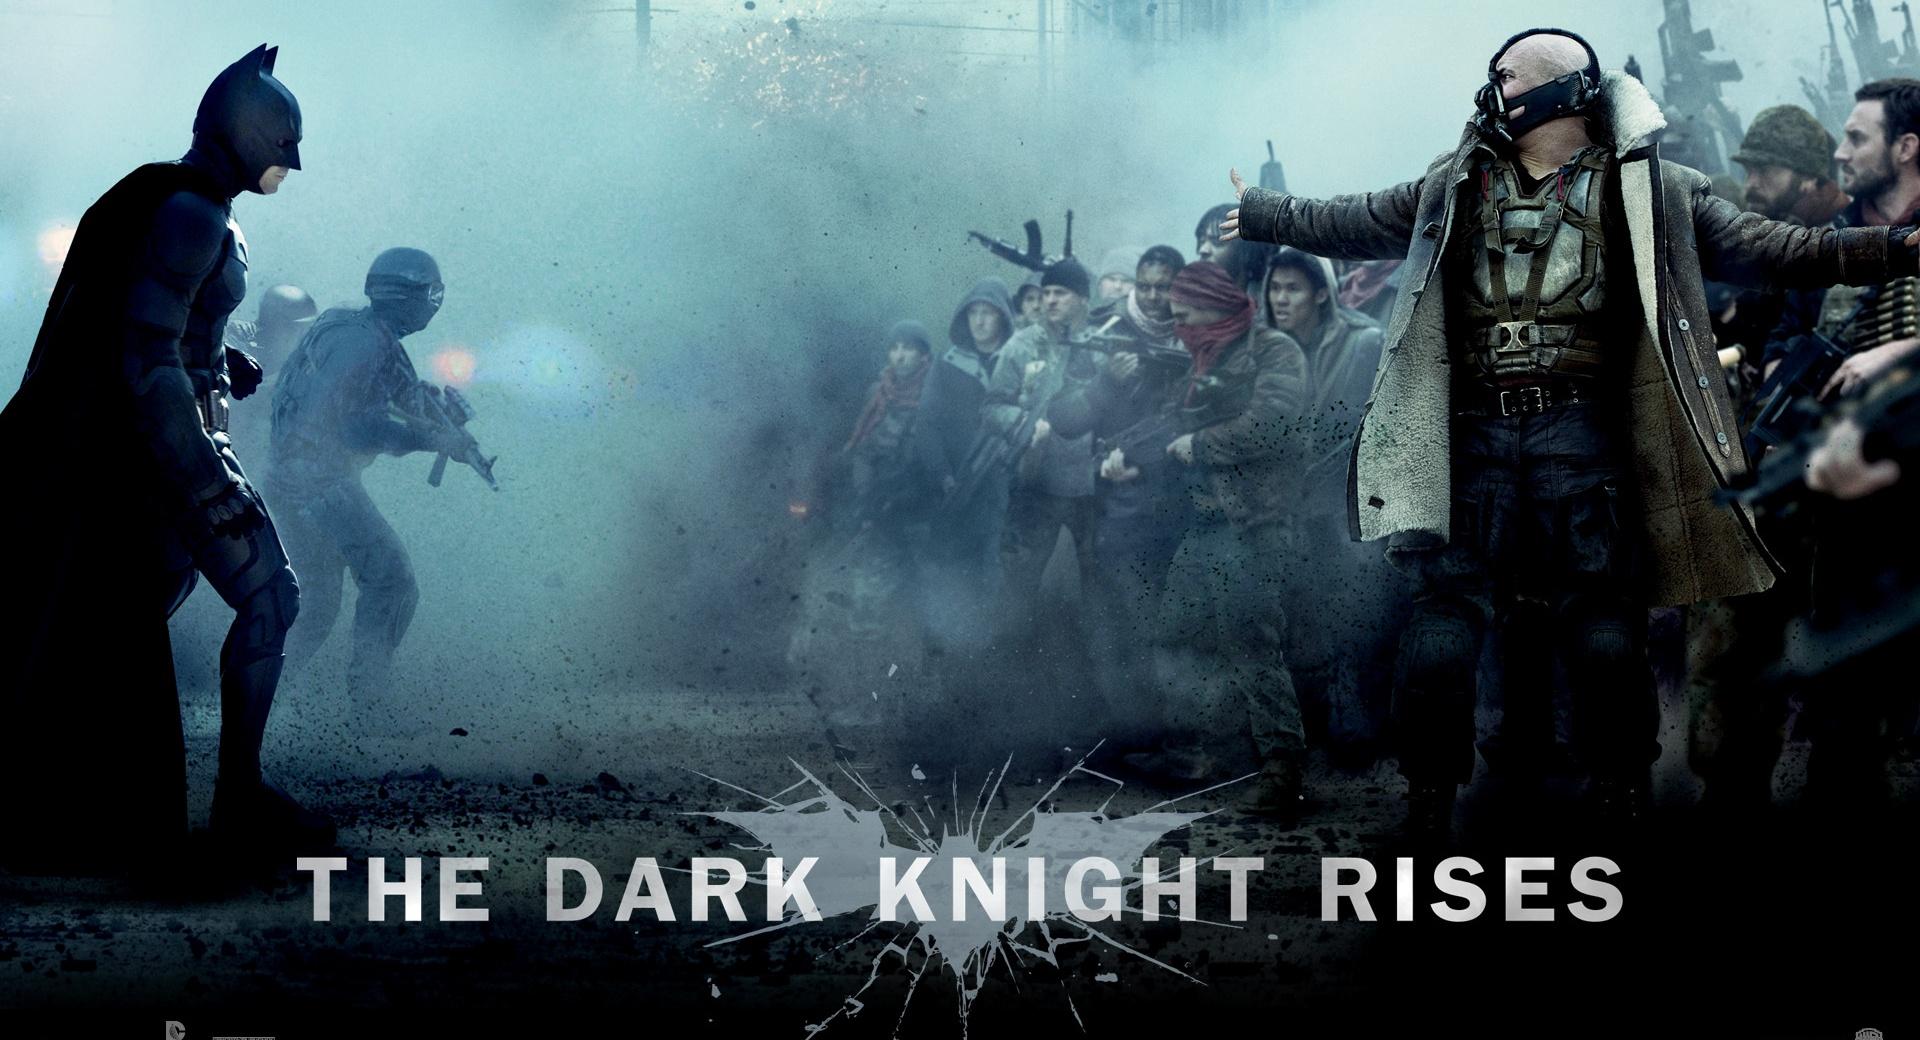 The Dark Knight Rises Bane Vs Batman at 2048 x 2048 iPad size wallpapers HD quality